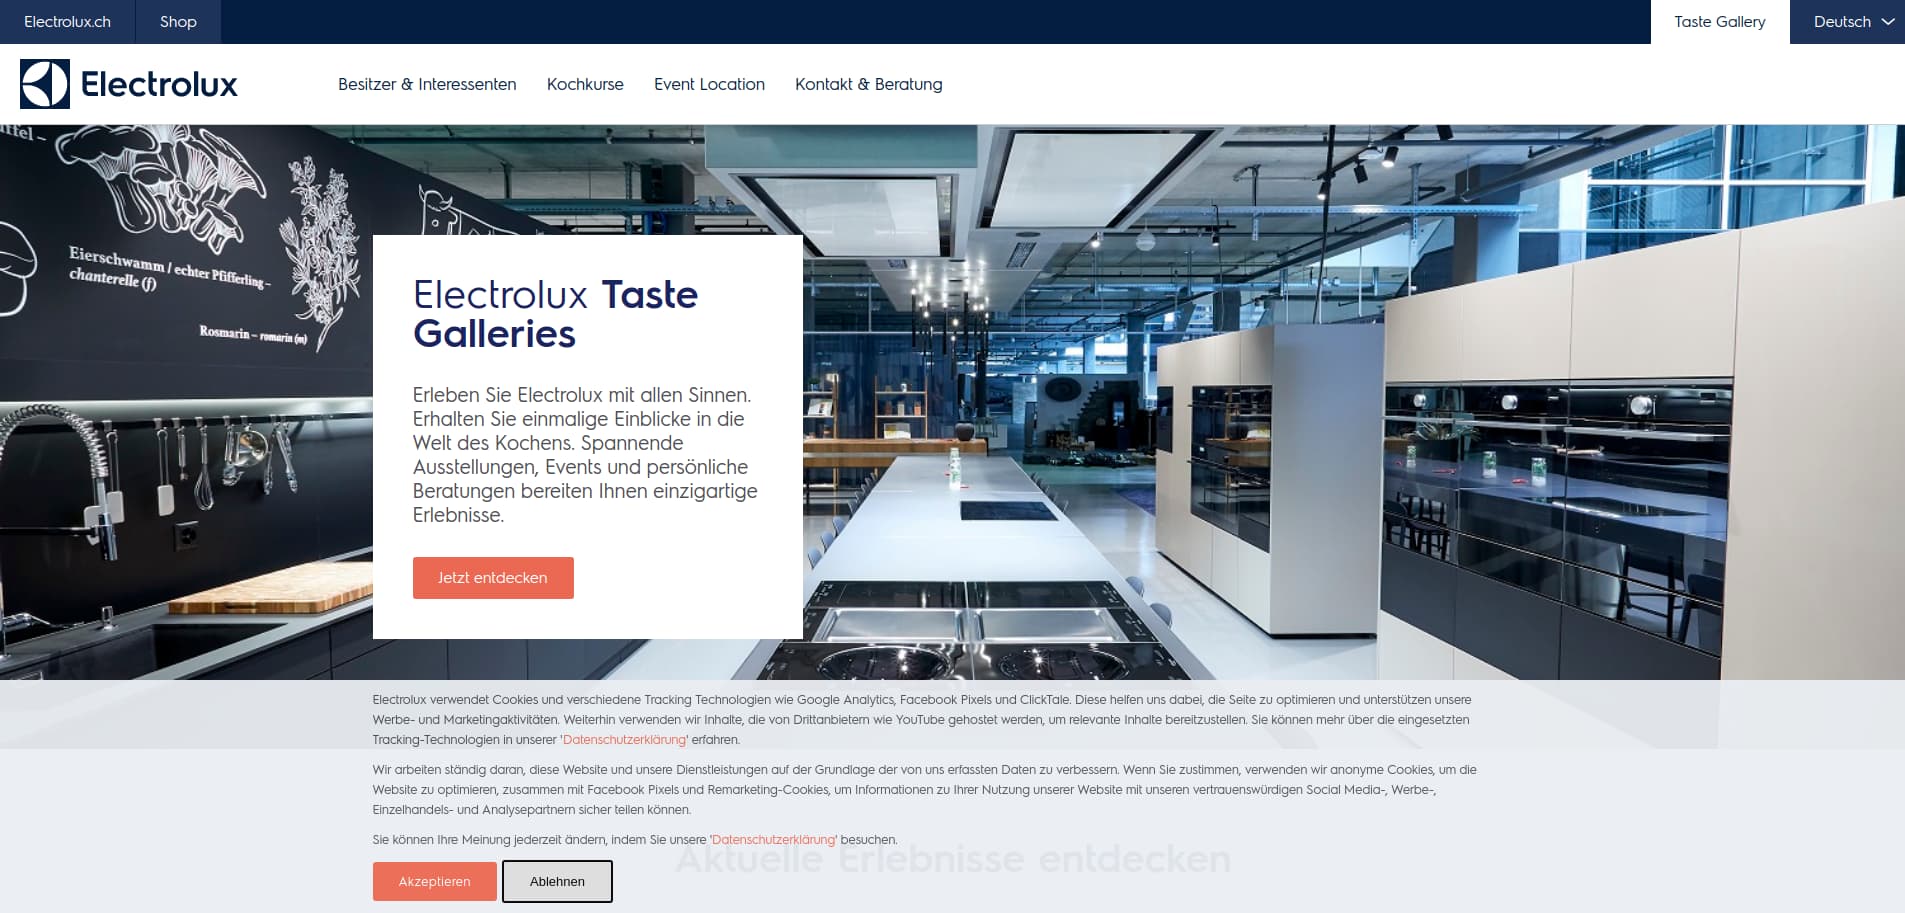 Electrolux Taste Gallery website